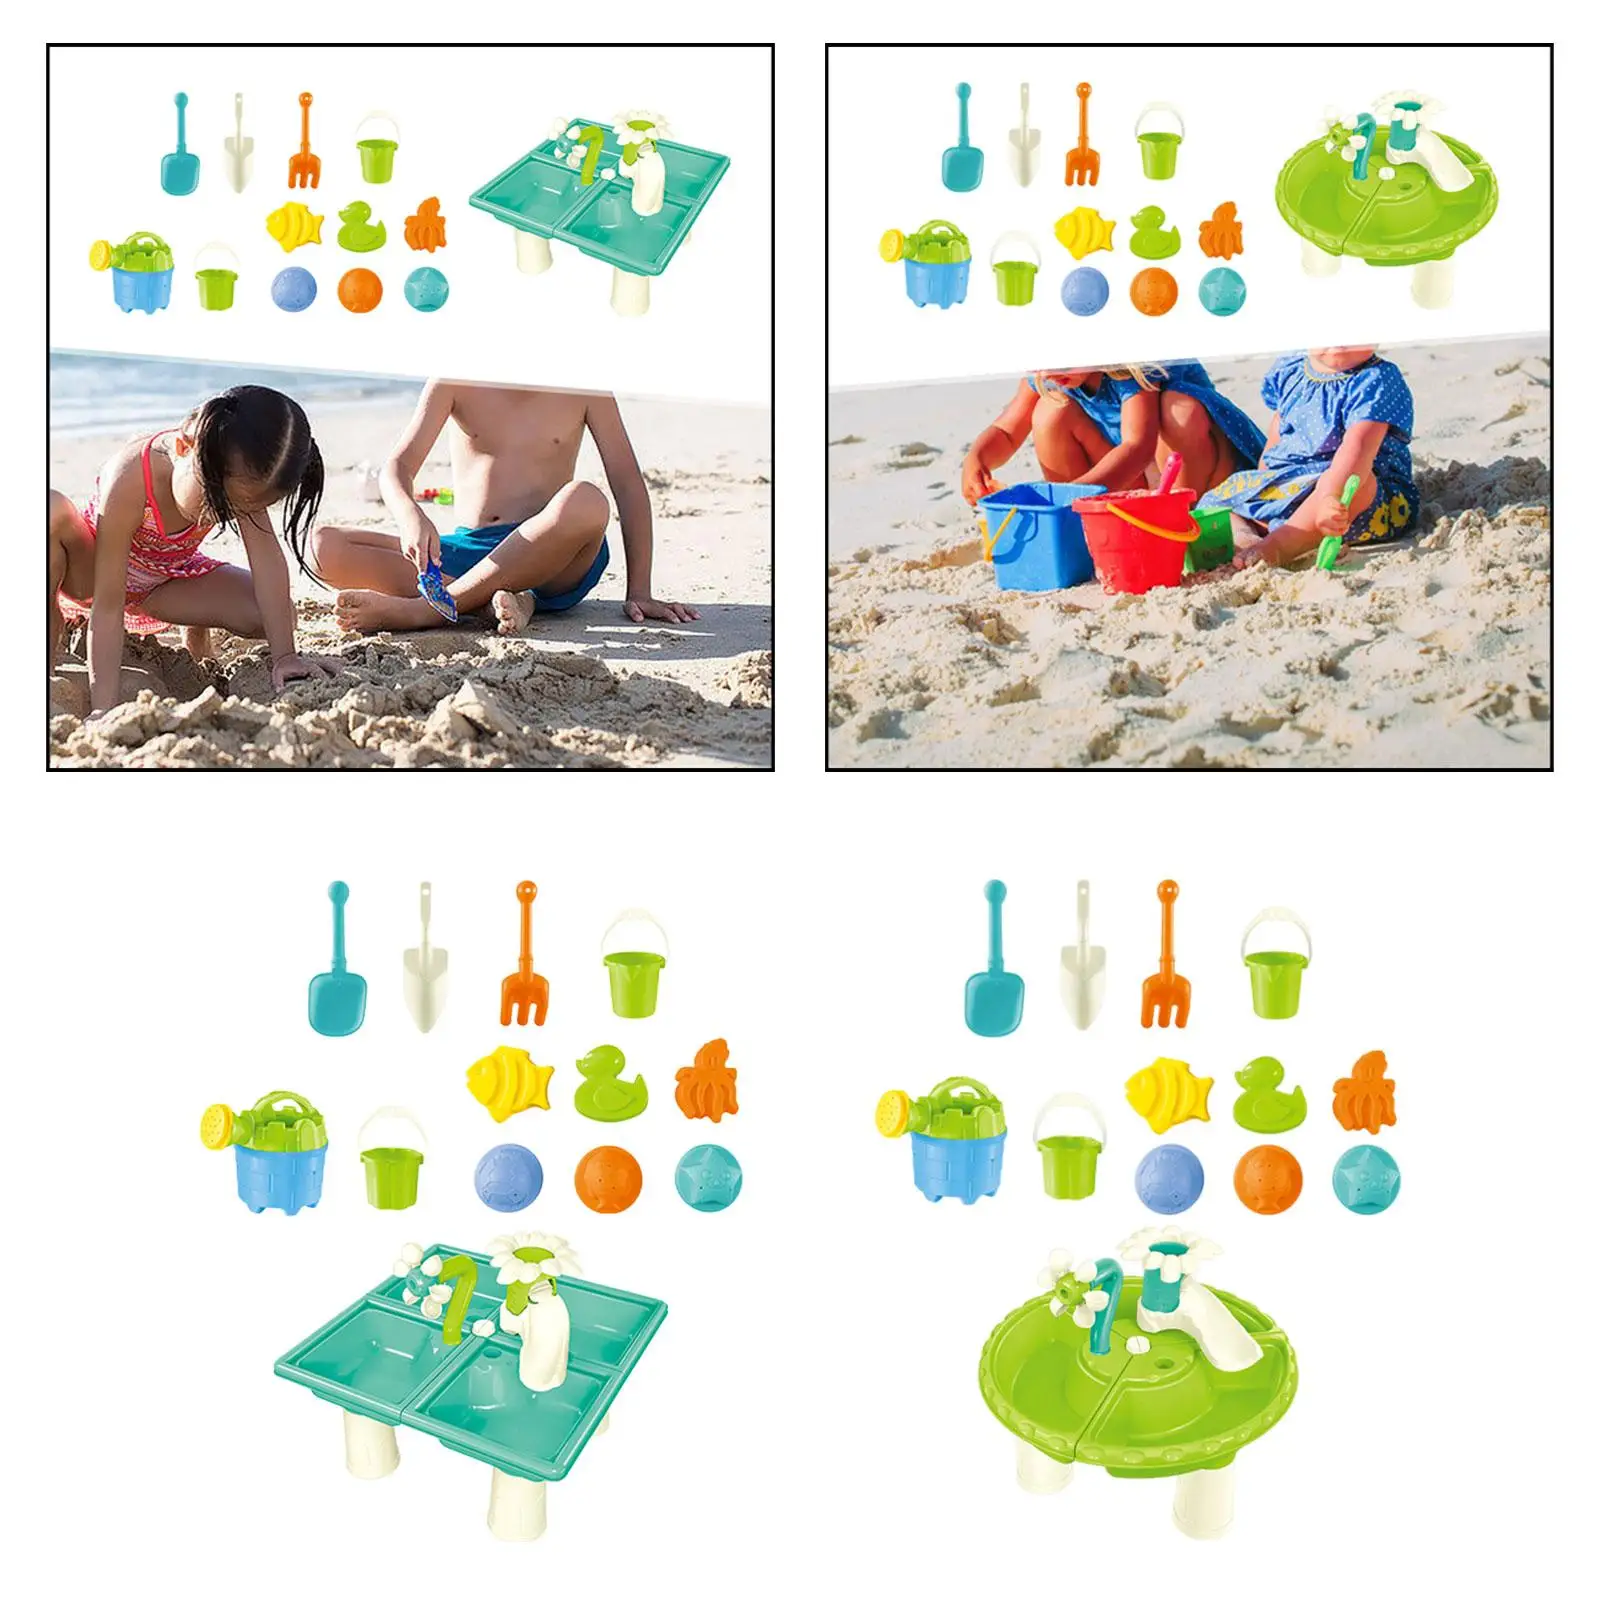 13x Pond Water Table Kids Beach Summer Toys kid water Table Sand and Water Table for Outside